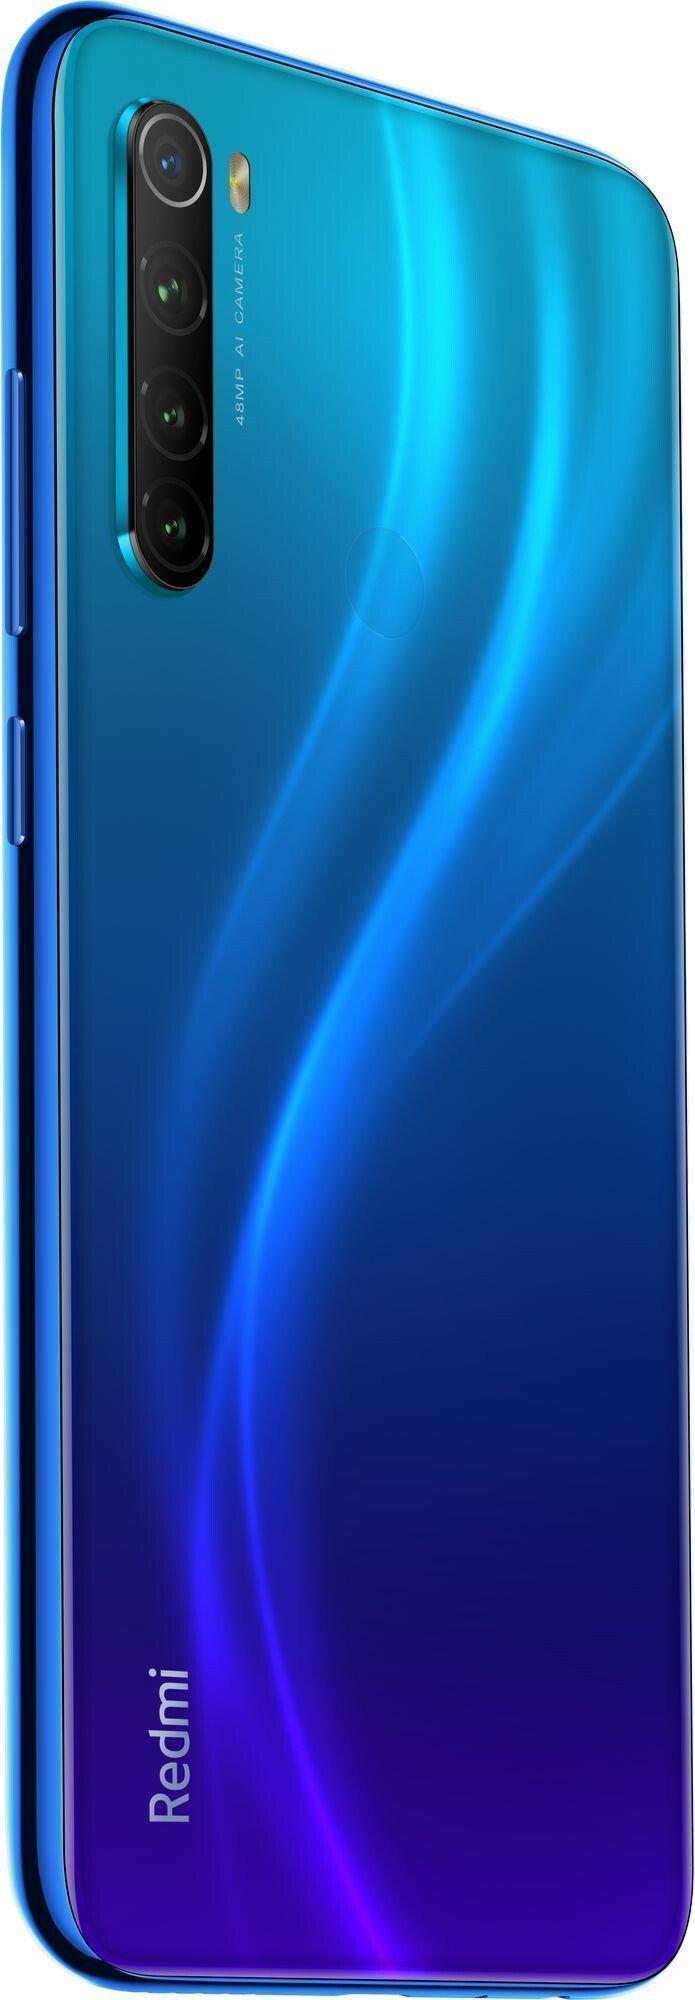 Купить Смартфон Xiaomi Redmi Note 8 3/32Gb Neptune Blue